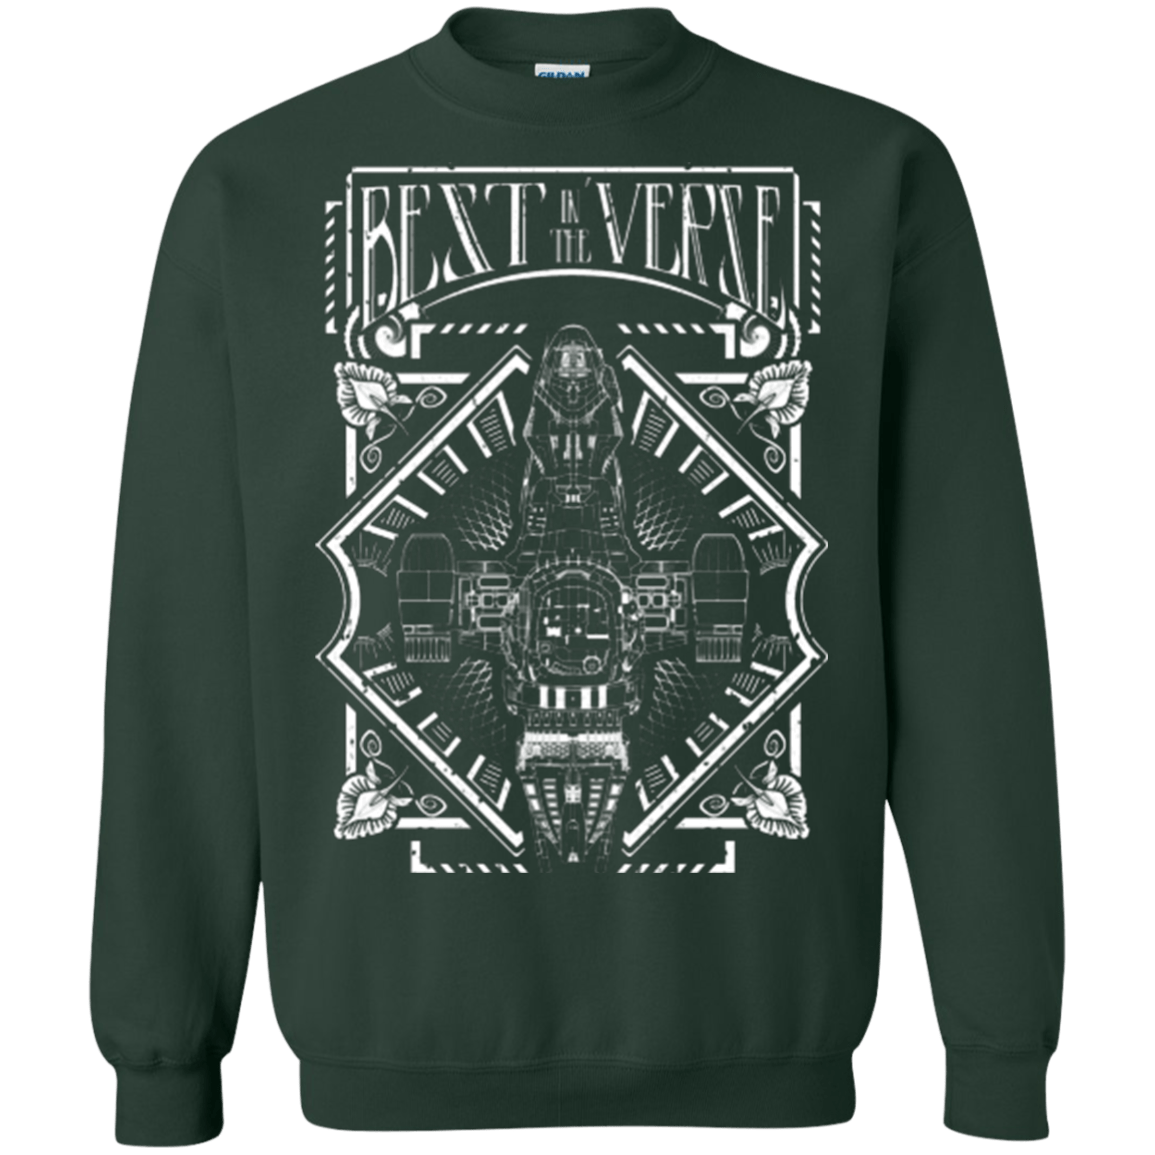 Sweatshirts Forest Green / Small Best in the Verse Crewneck Sweatshirt